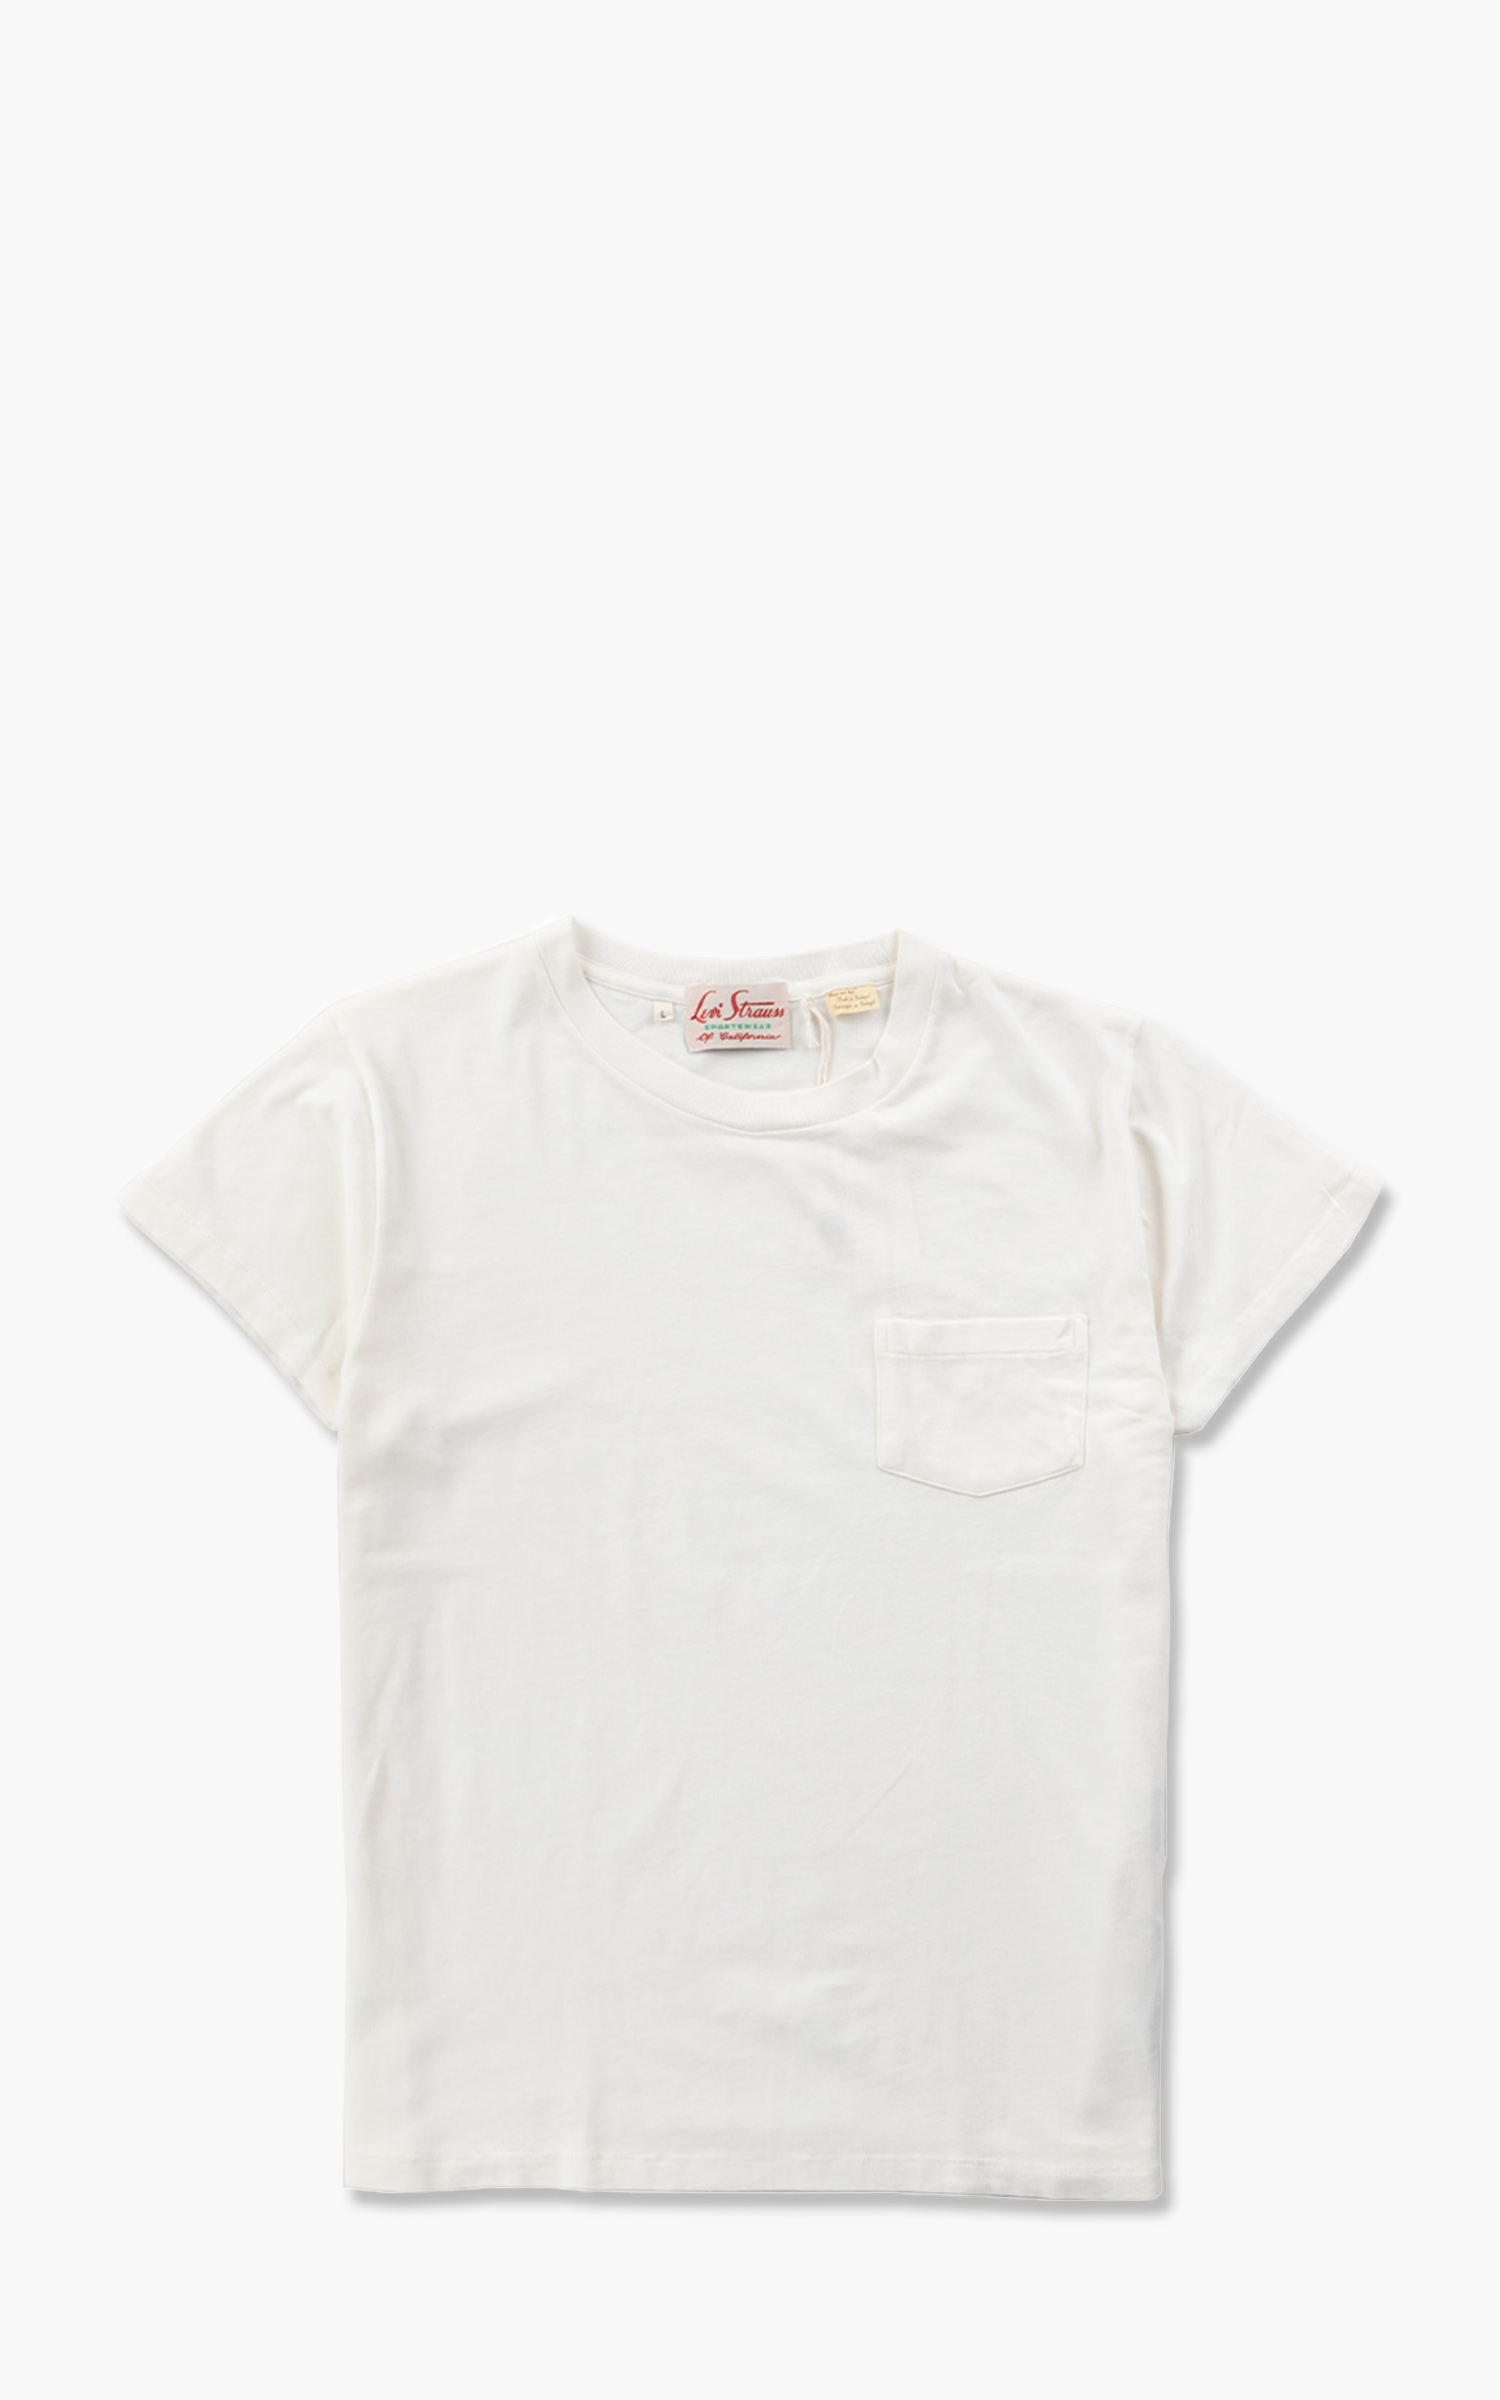 Levi's Vintage Clothing Off-White 1950's Sportswear T-Shirt Levi's Vintage